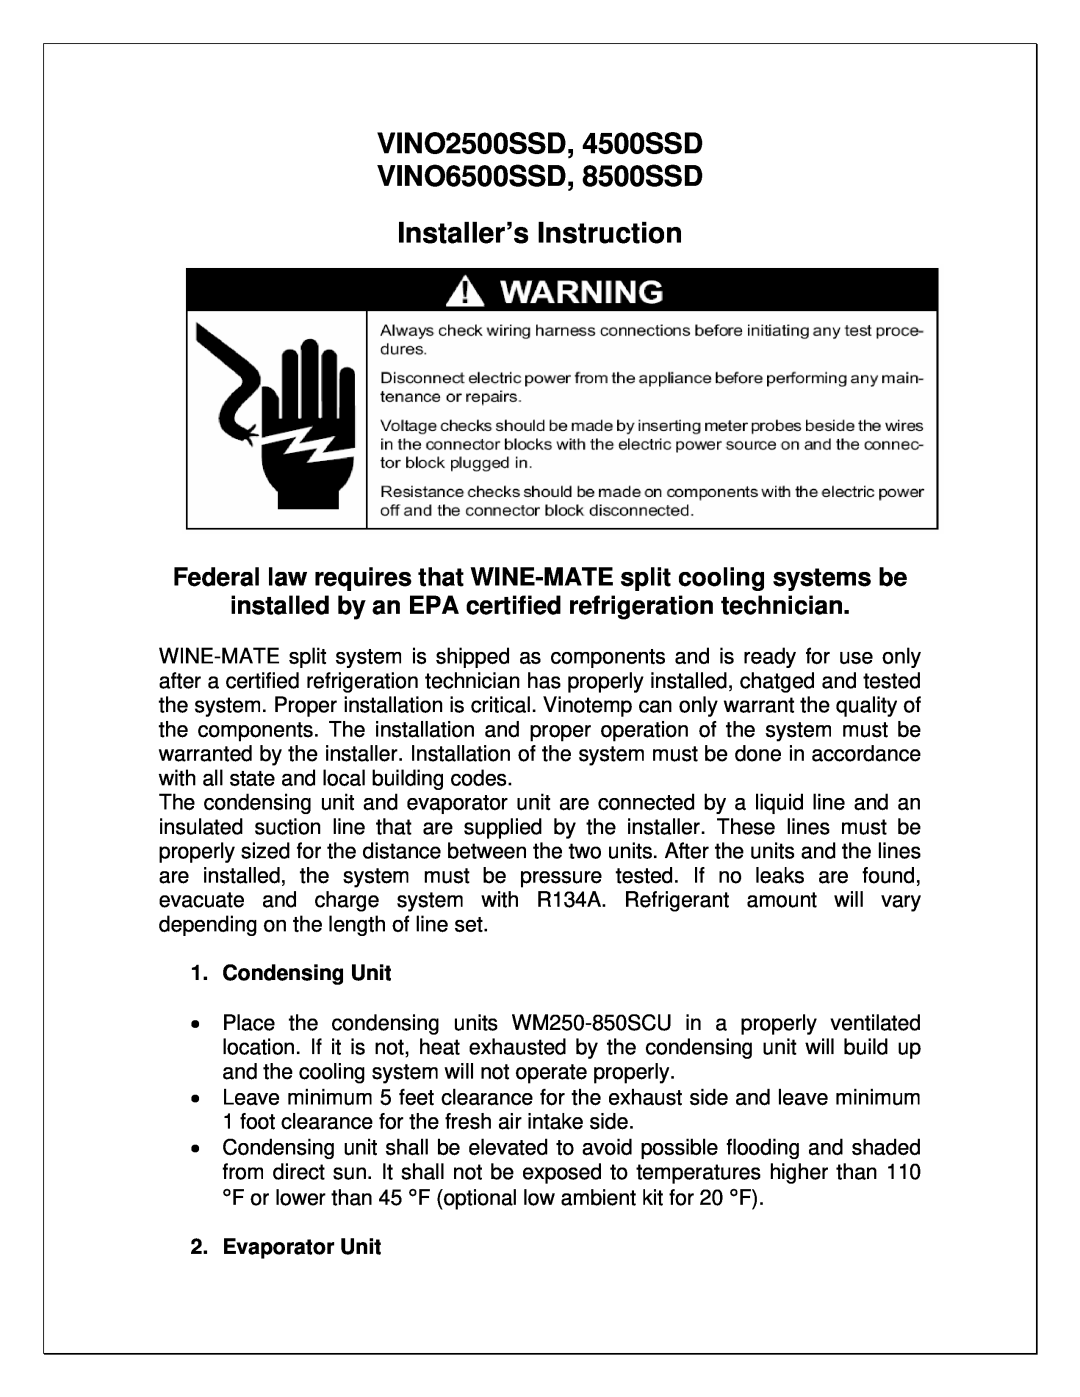 Vinotemp VINO4500SSD manual VINO2500SSD, 4500SSD VINO6500SSD, 8500SSD, Installer’s Instruction, Condensing Unit 